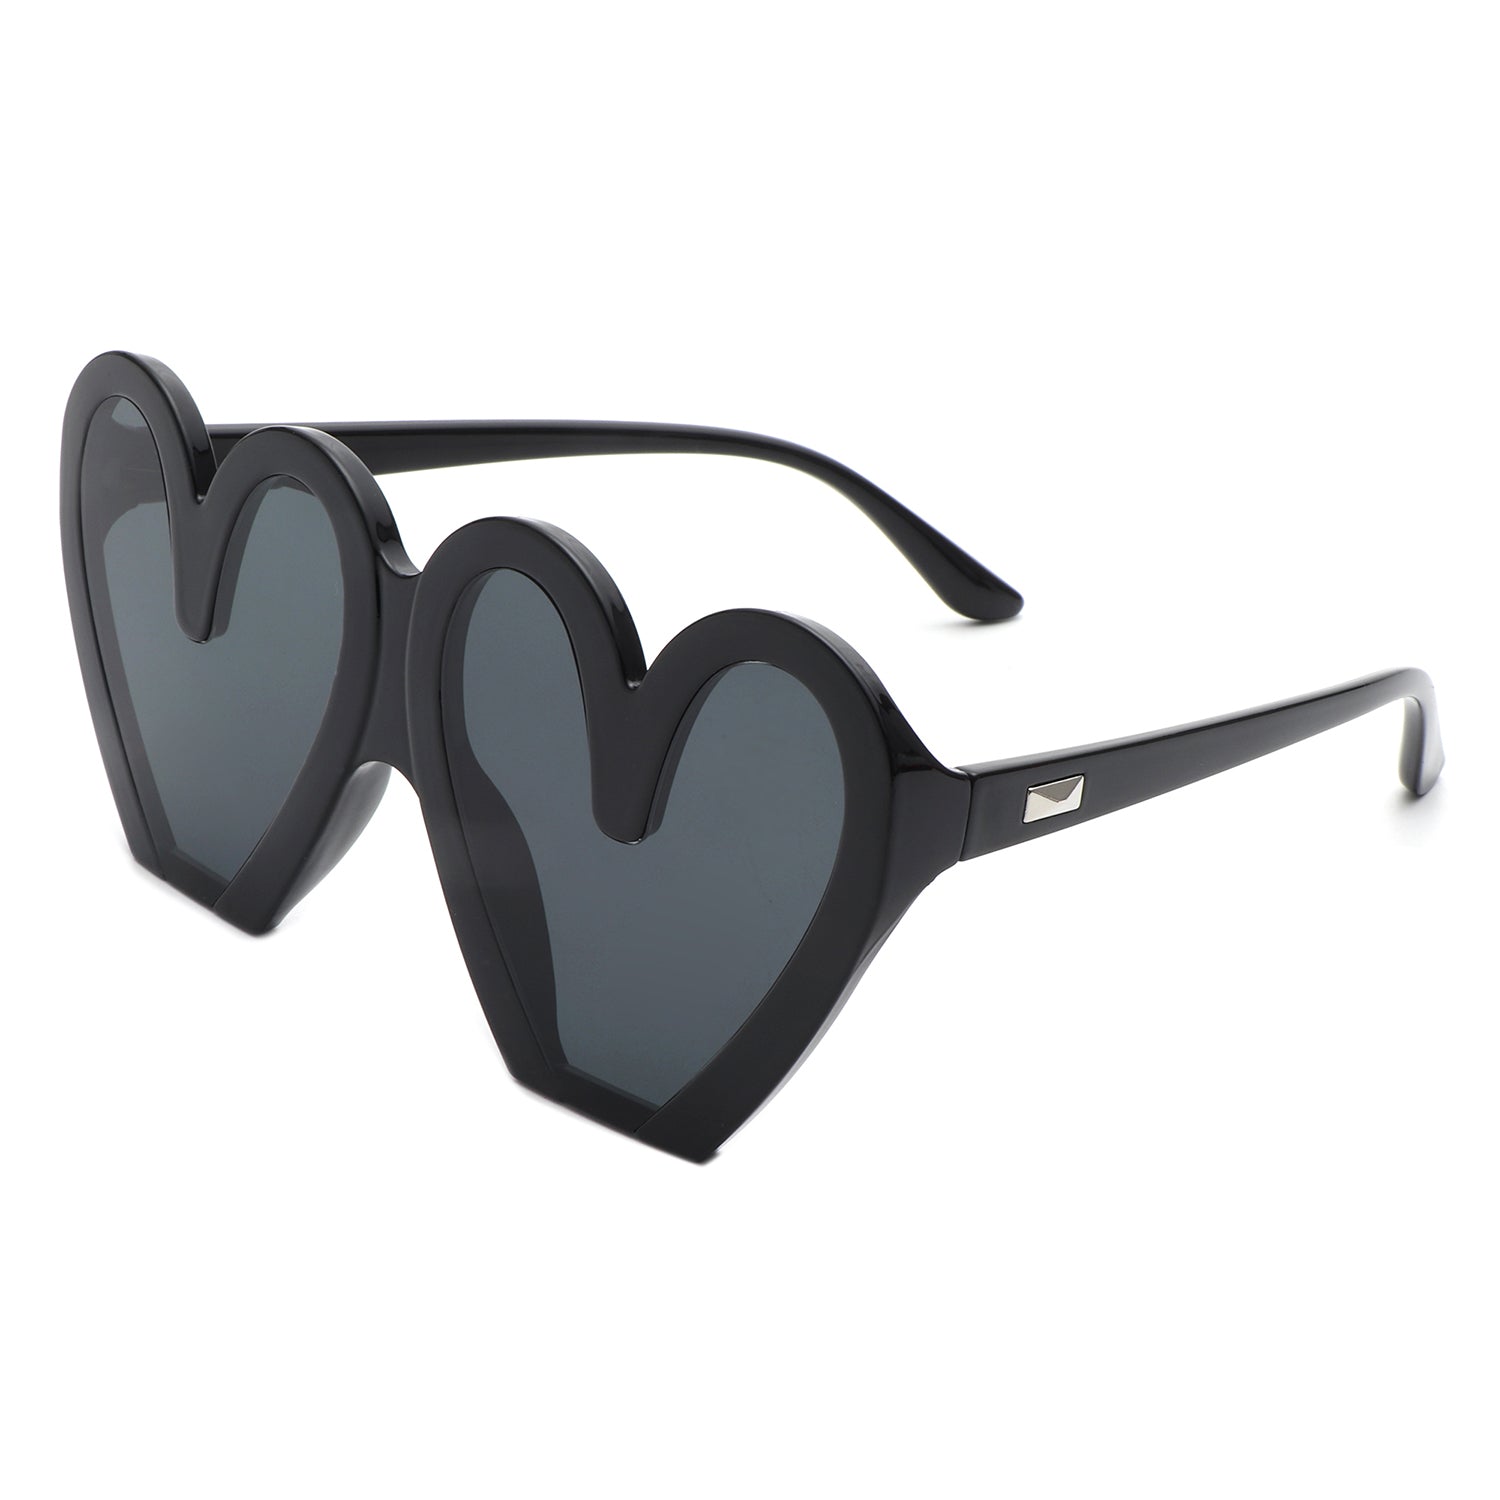 Buy Women's Lady Girl Fashion Large Oversized Heart Shaped Retro Plastic  Sunglasses Cute Love Eyewear Red at Amazon.in